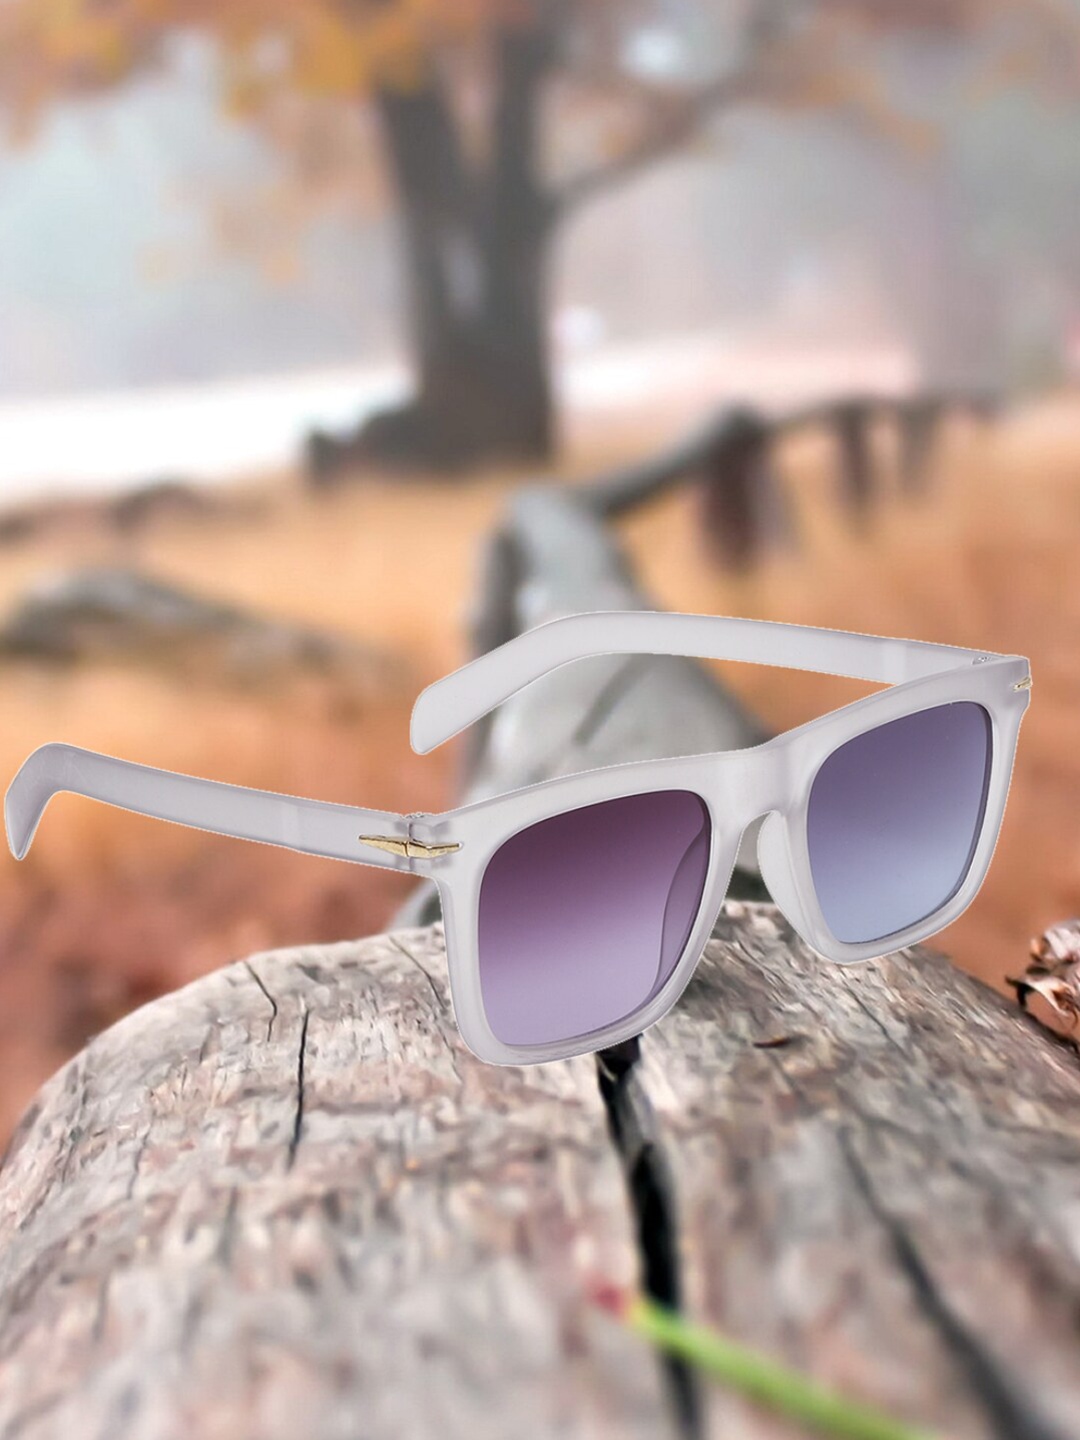 

Swiss Design Unisex Wayfarer Sunglasses with UV Protected Lens SDSG-09-GY, Purple